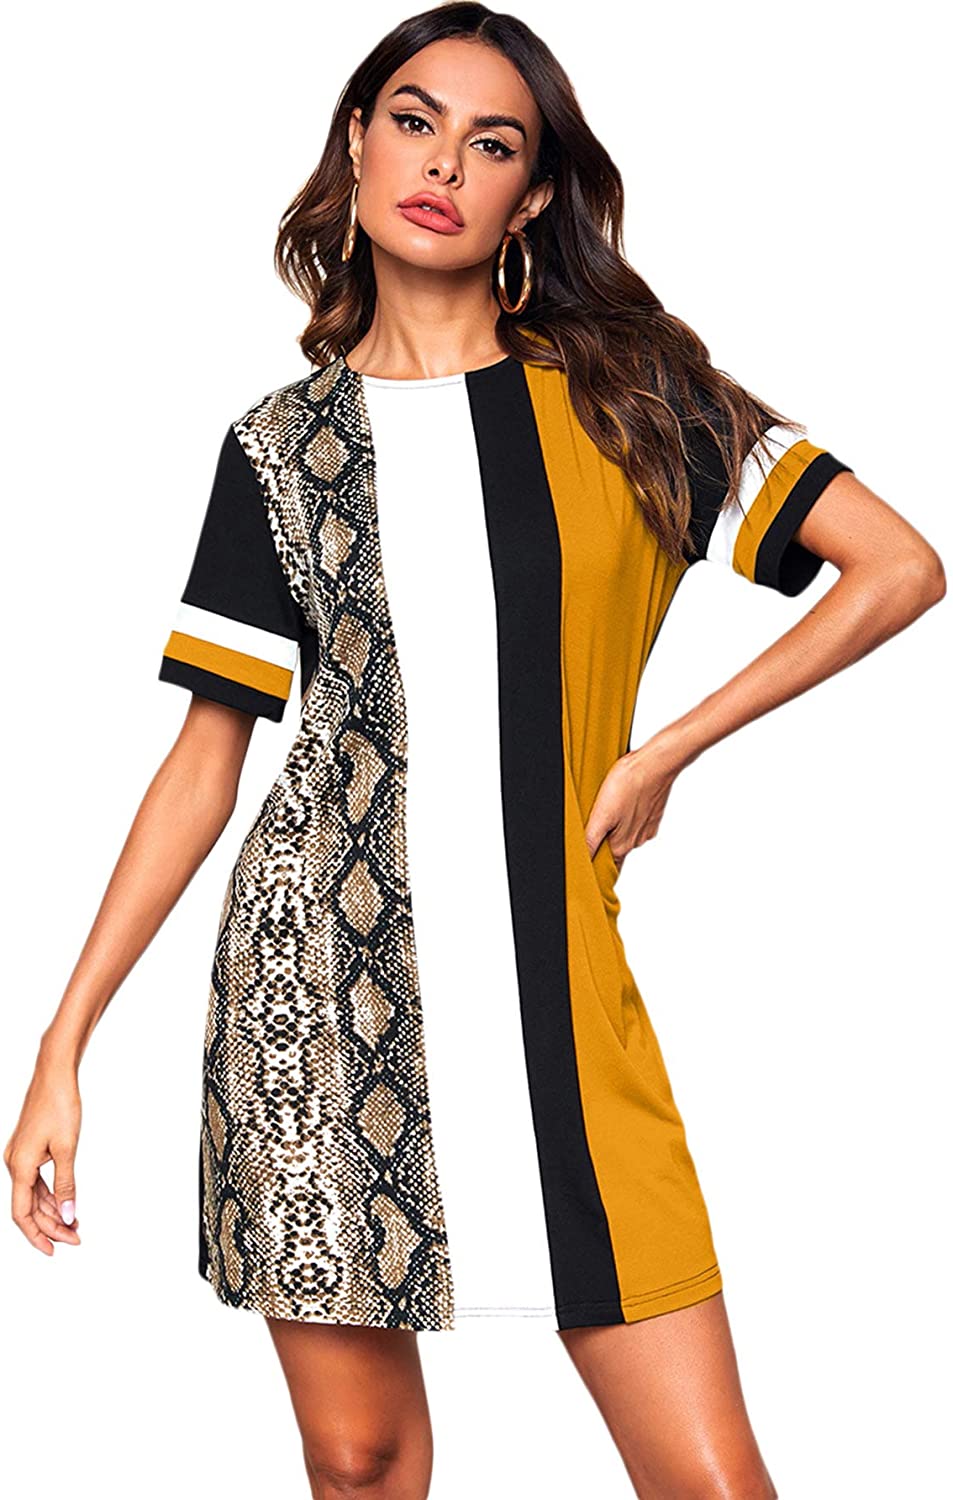 Floerns Women's Short Sleeve Color Block Leopard Print Tunic Dress 